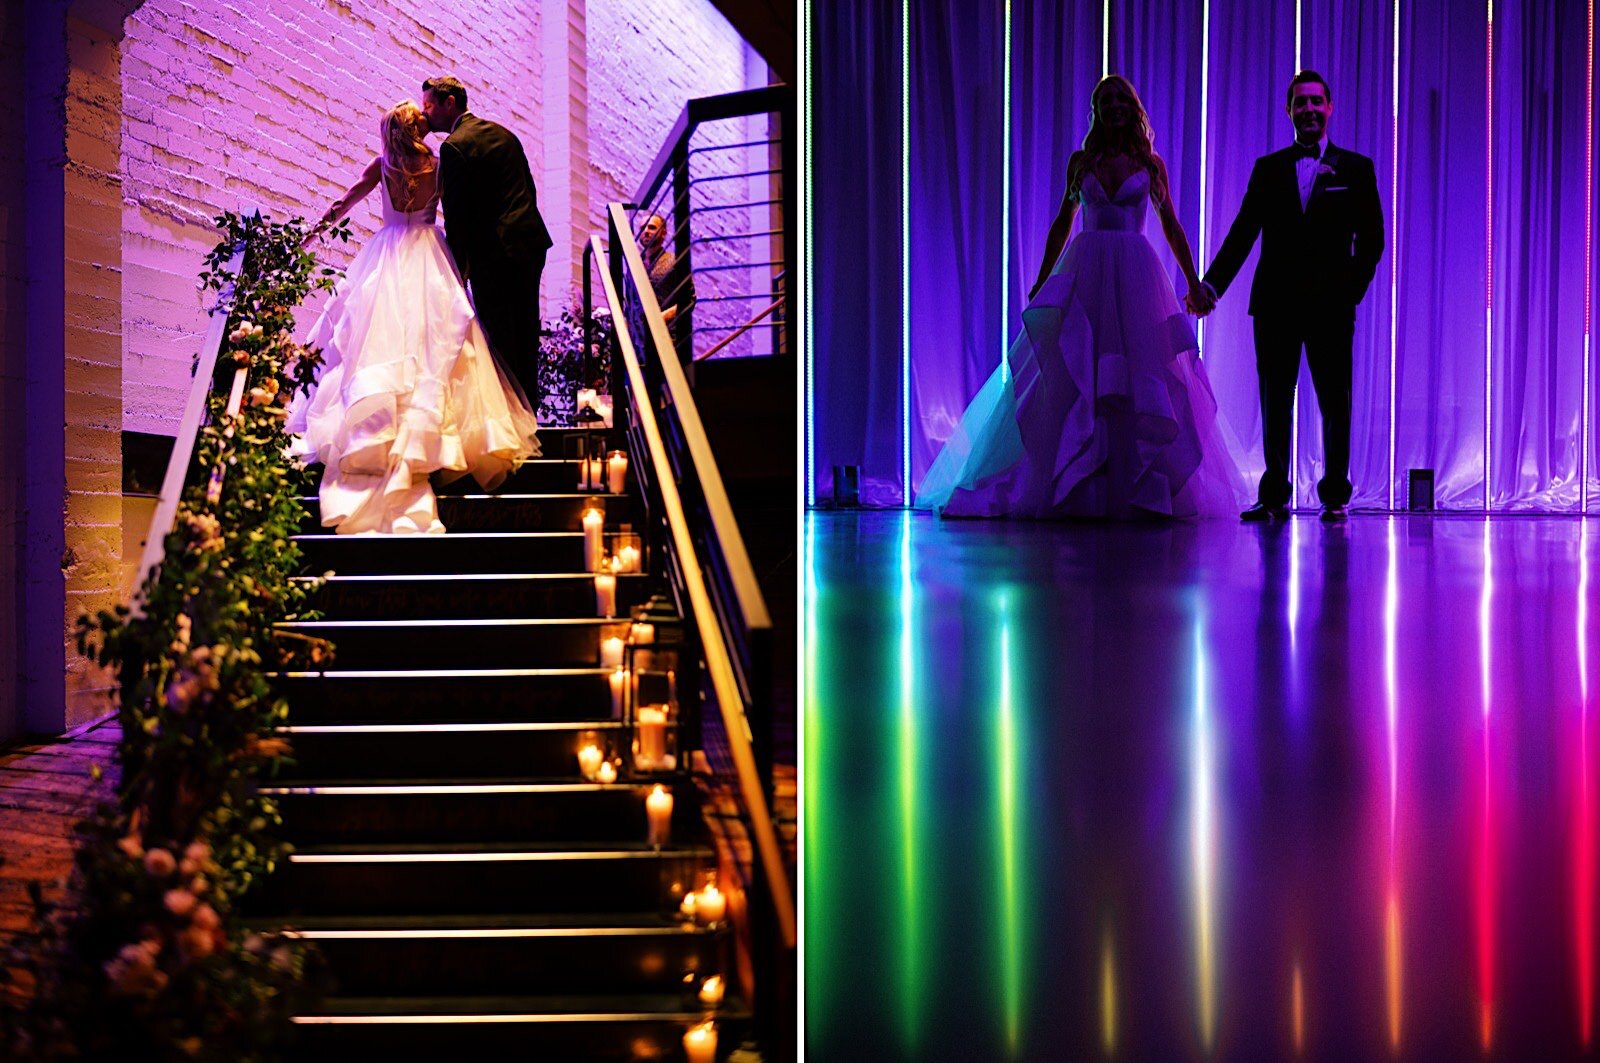 56_flynn_epic_led_pixel_stick_portraits_Wedding_by_Ryan_colorful.jpg